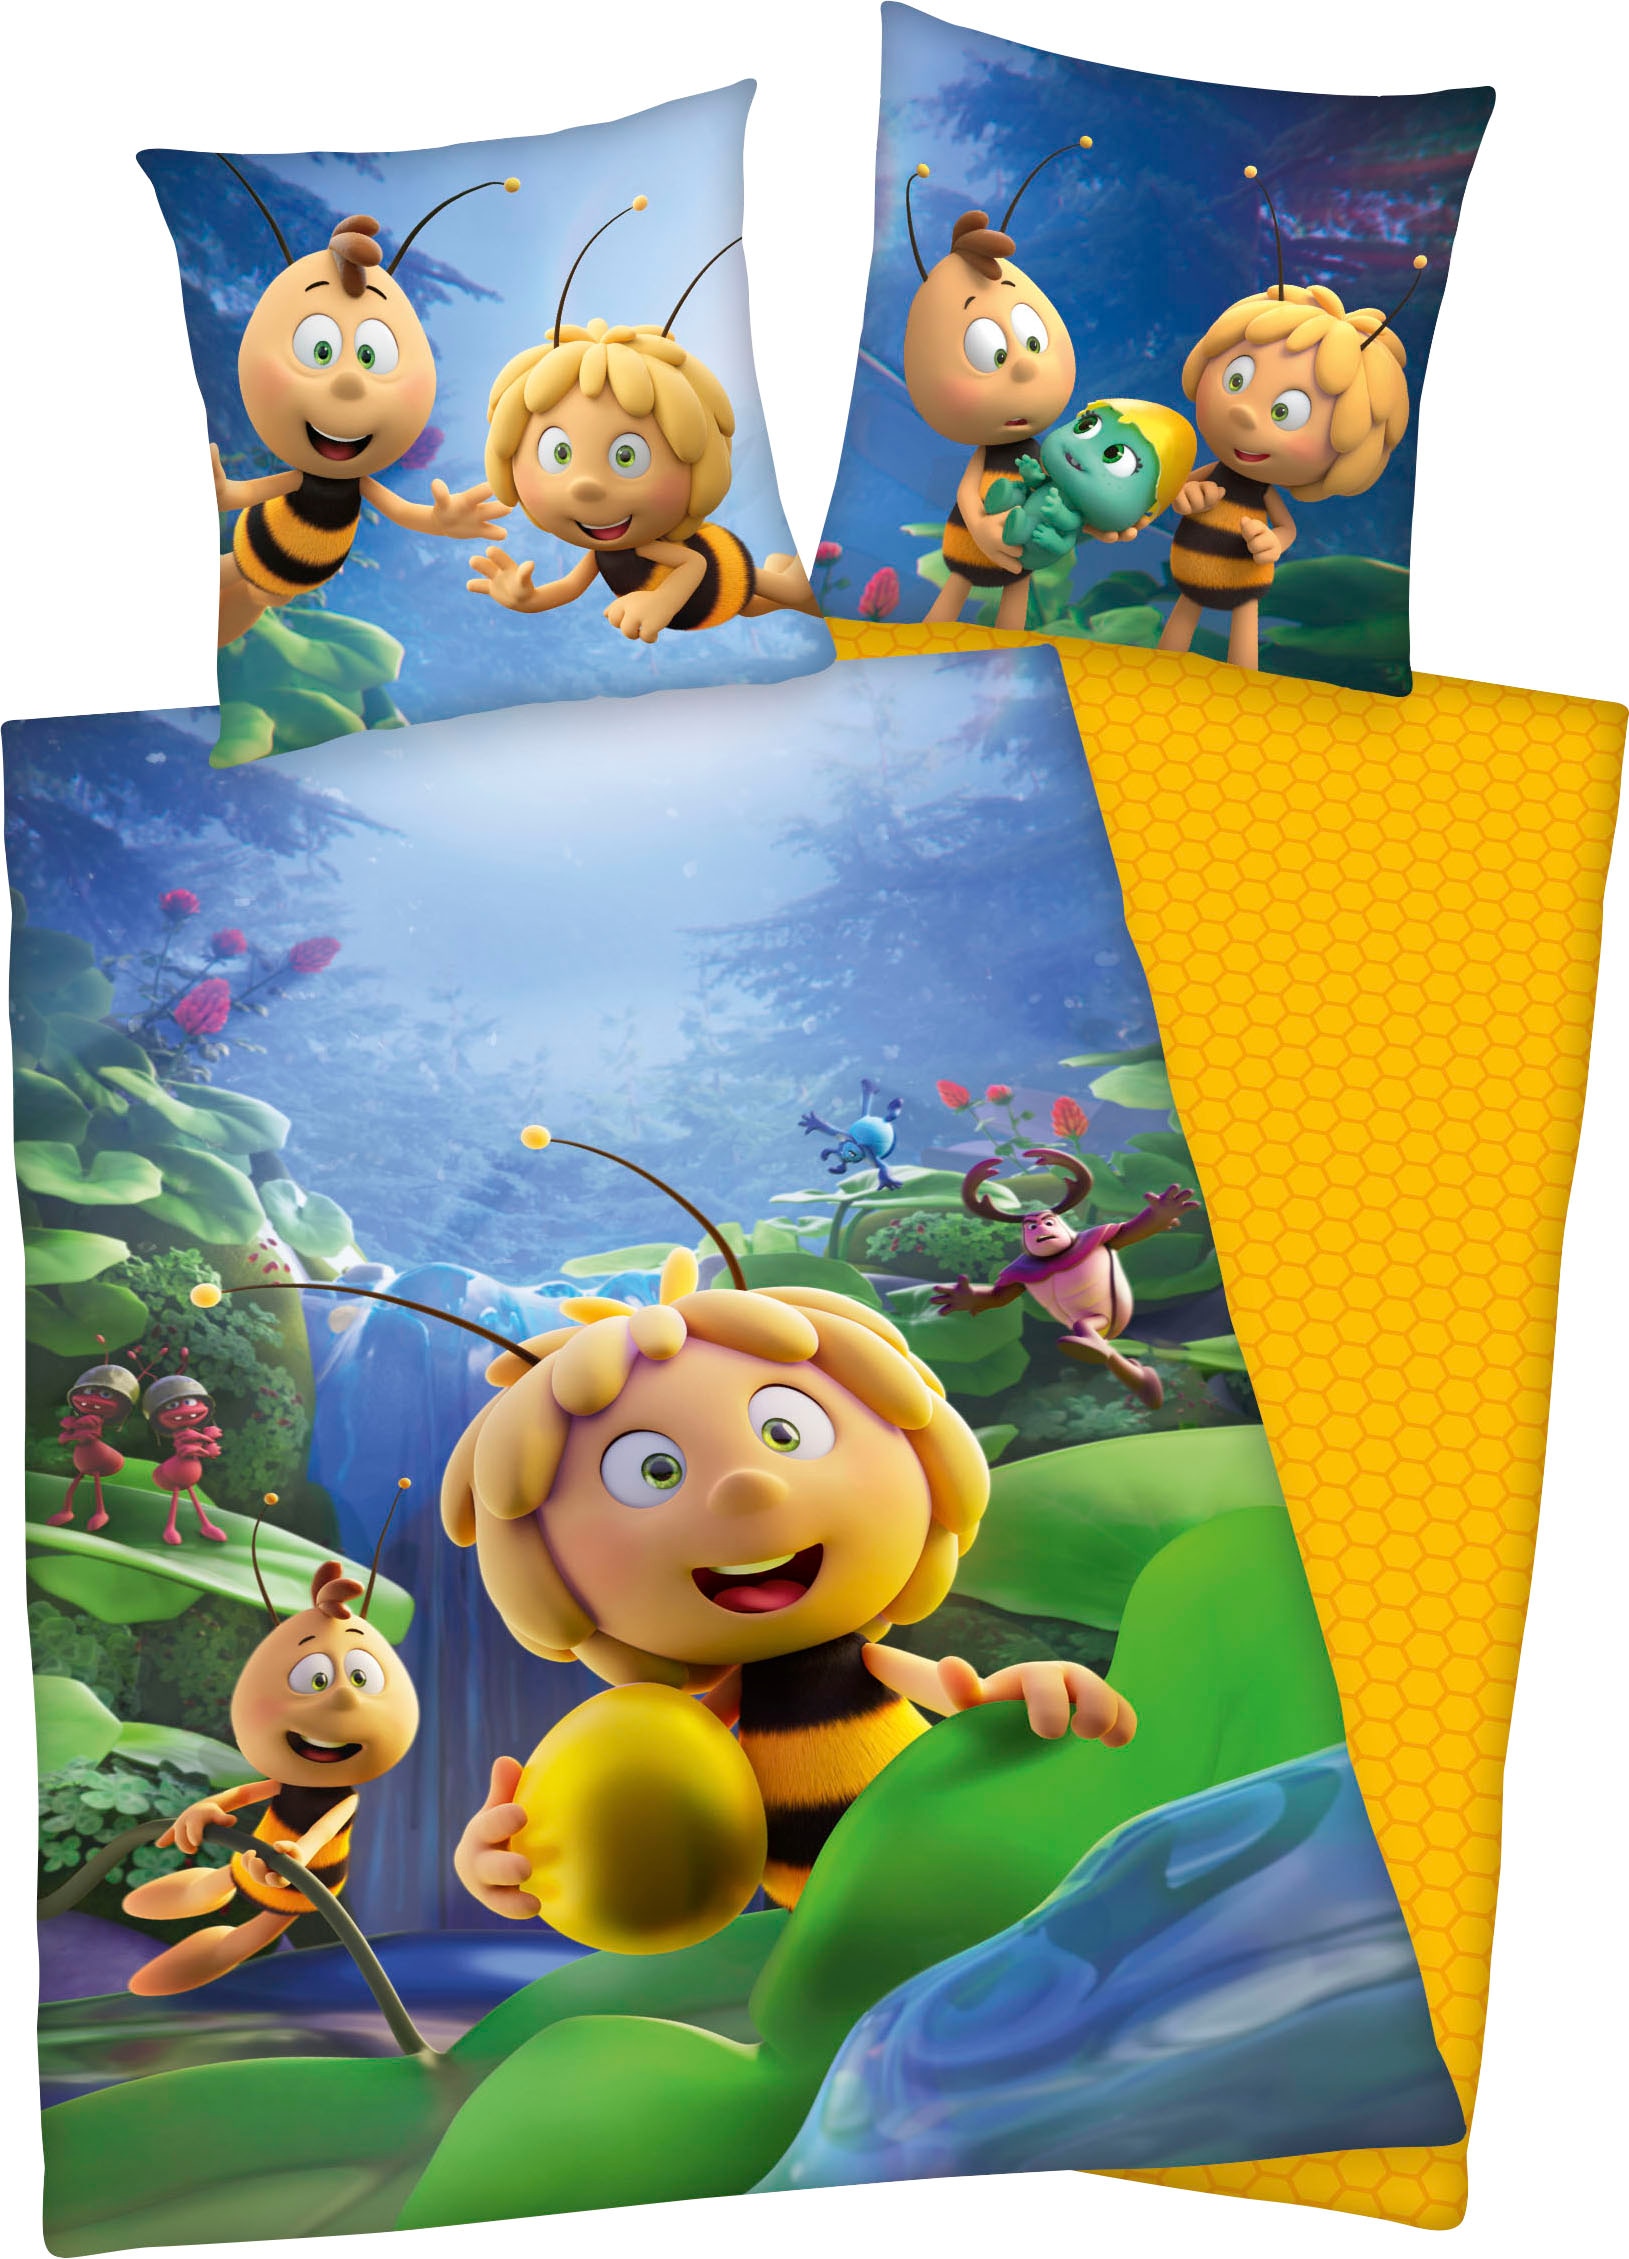 Die Biene Maja Kinderbettwäsche "Biene Maja", mit tollem Biene Maja und Willi Motiv